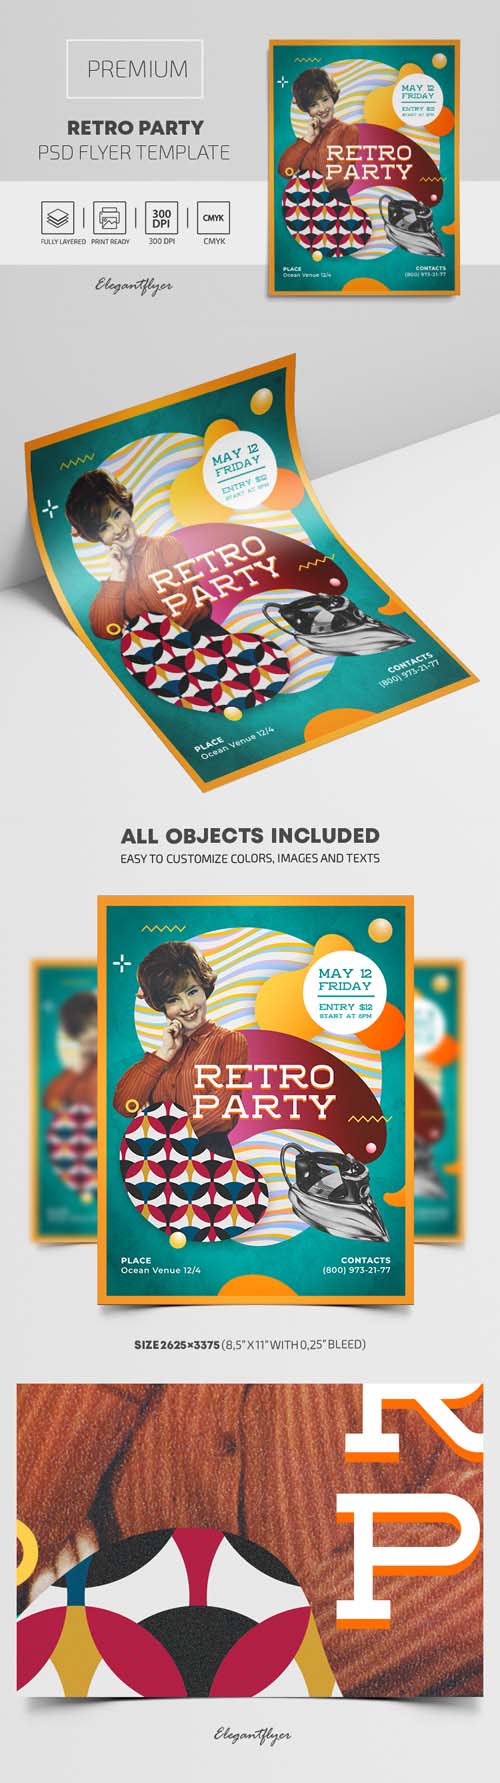 Retro Party Premium PSD Flyer Template